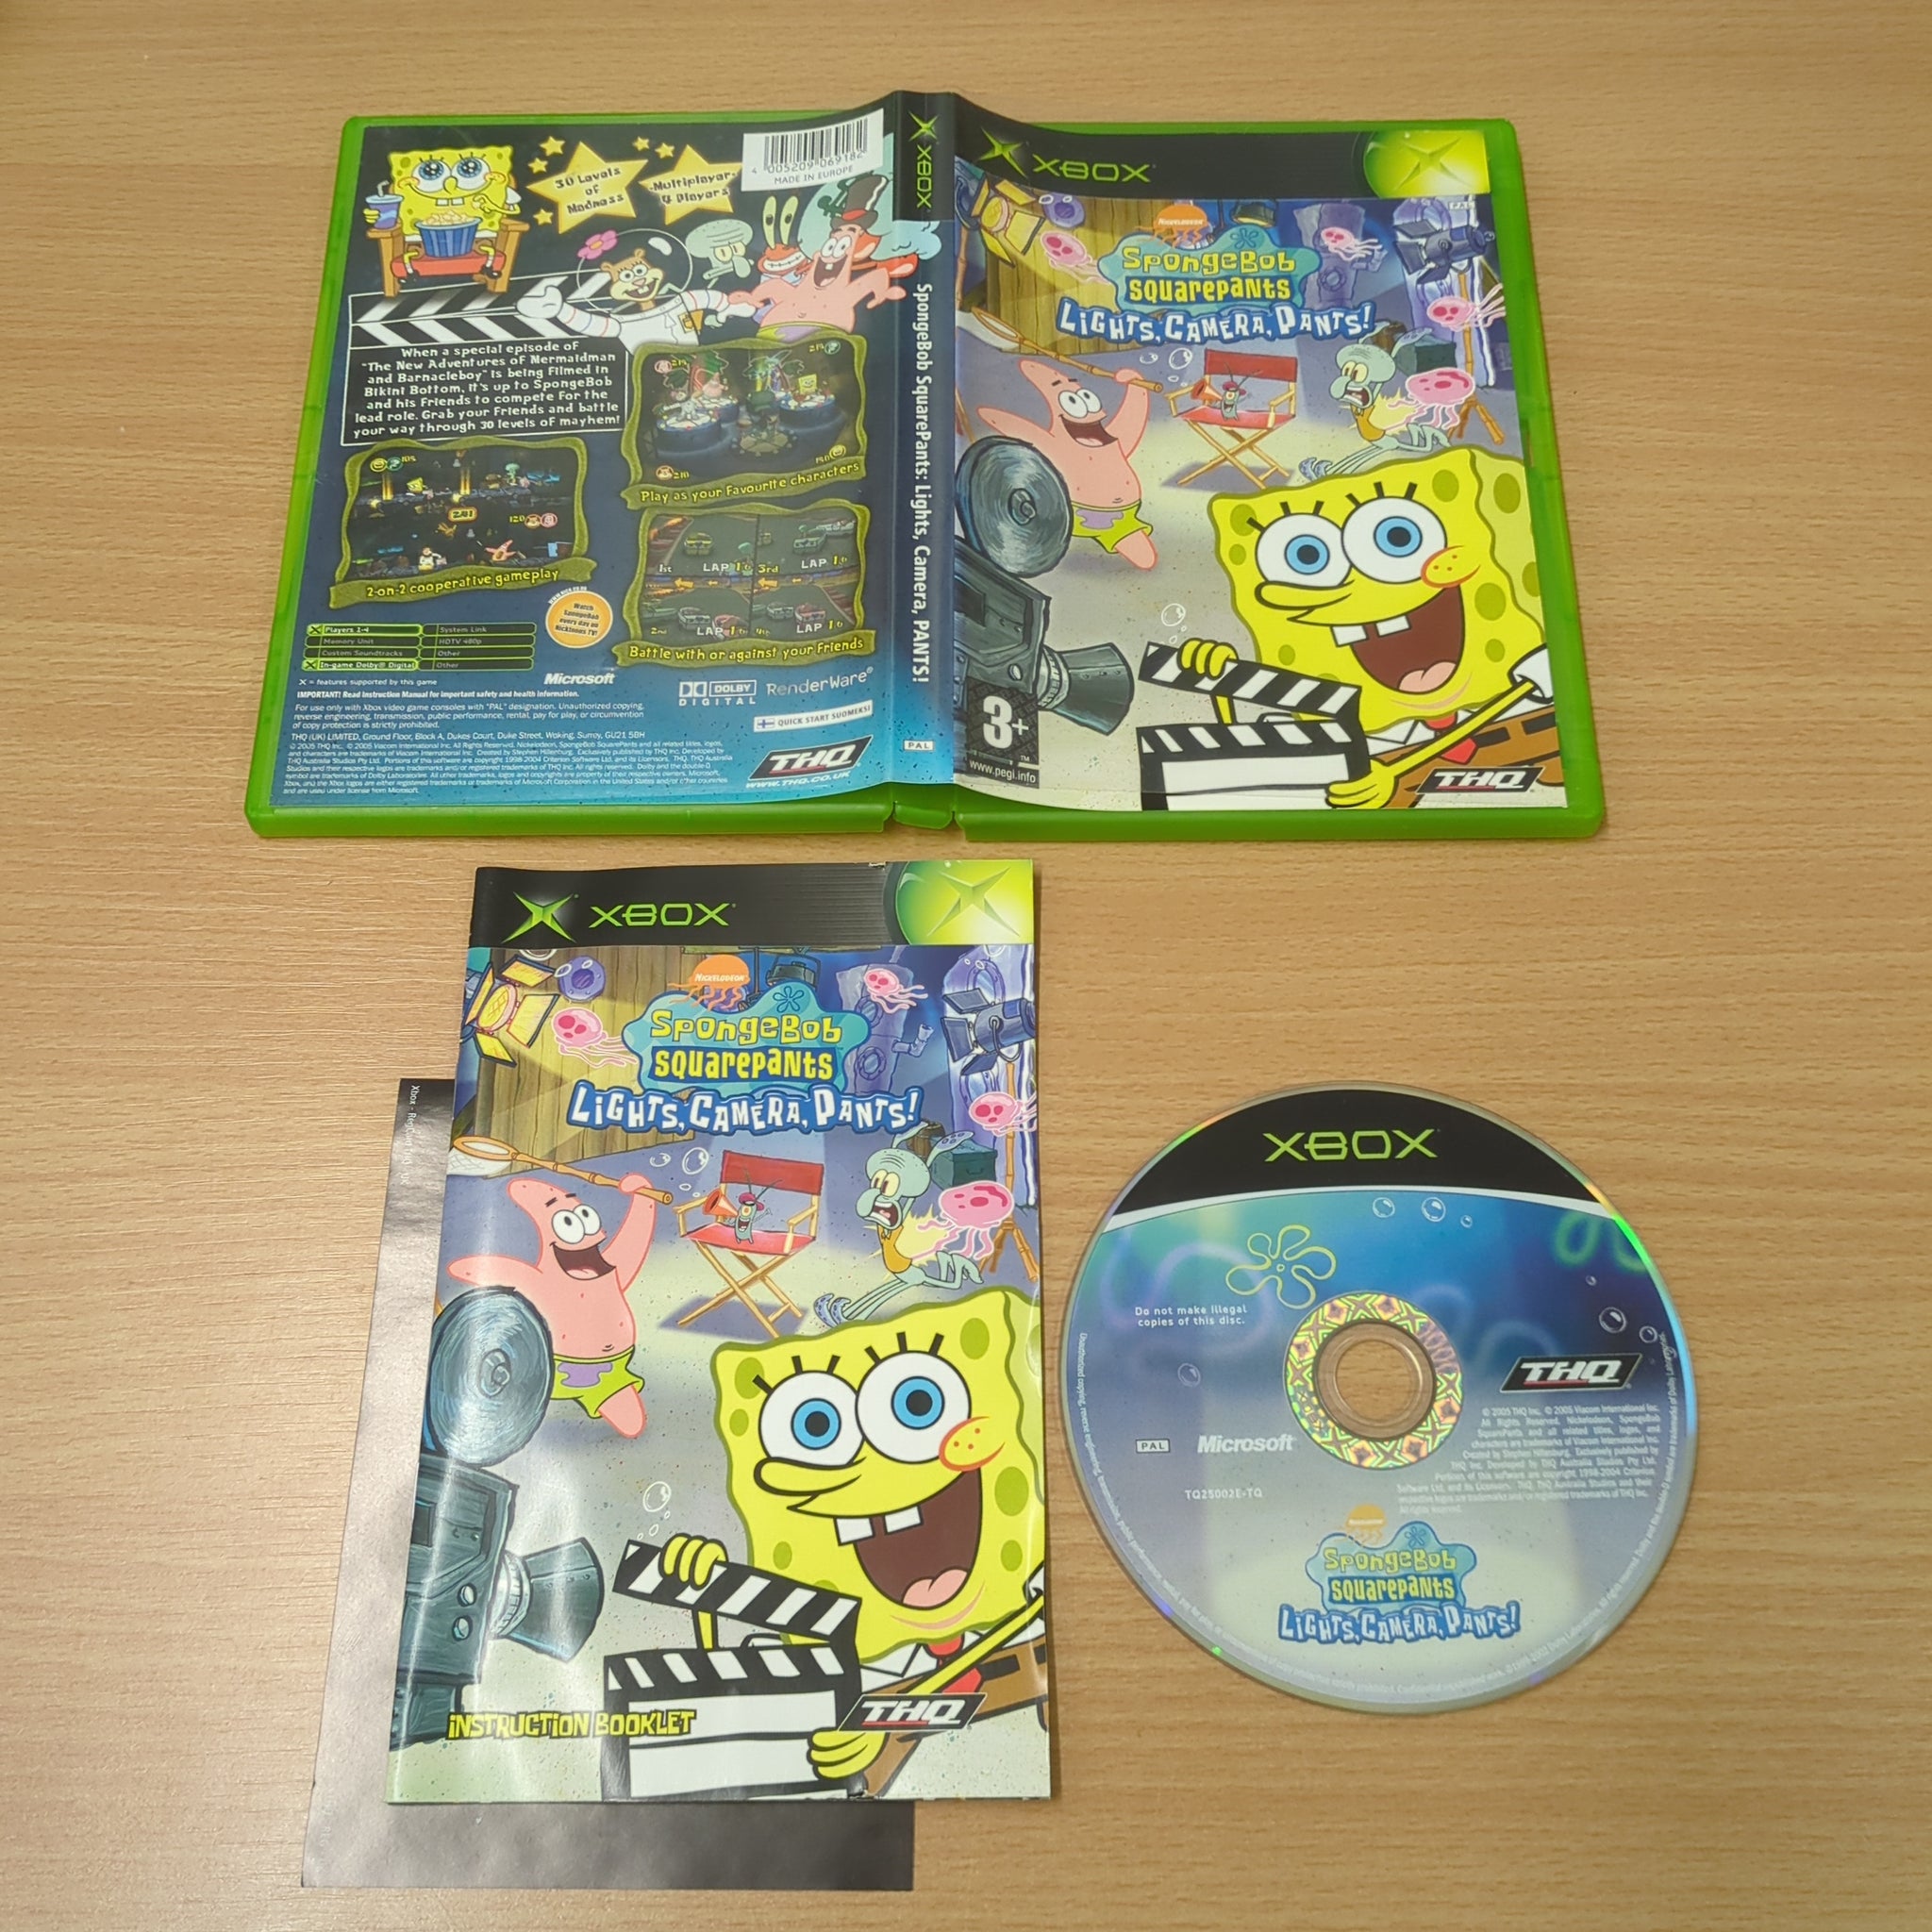 SpongeBob SquarePants: Lights, Camera, Pants! original Xbox game